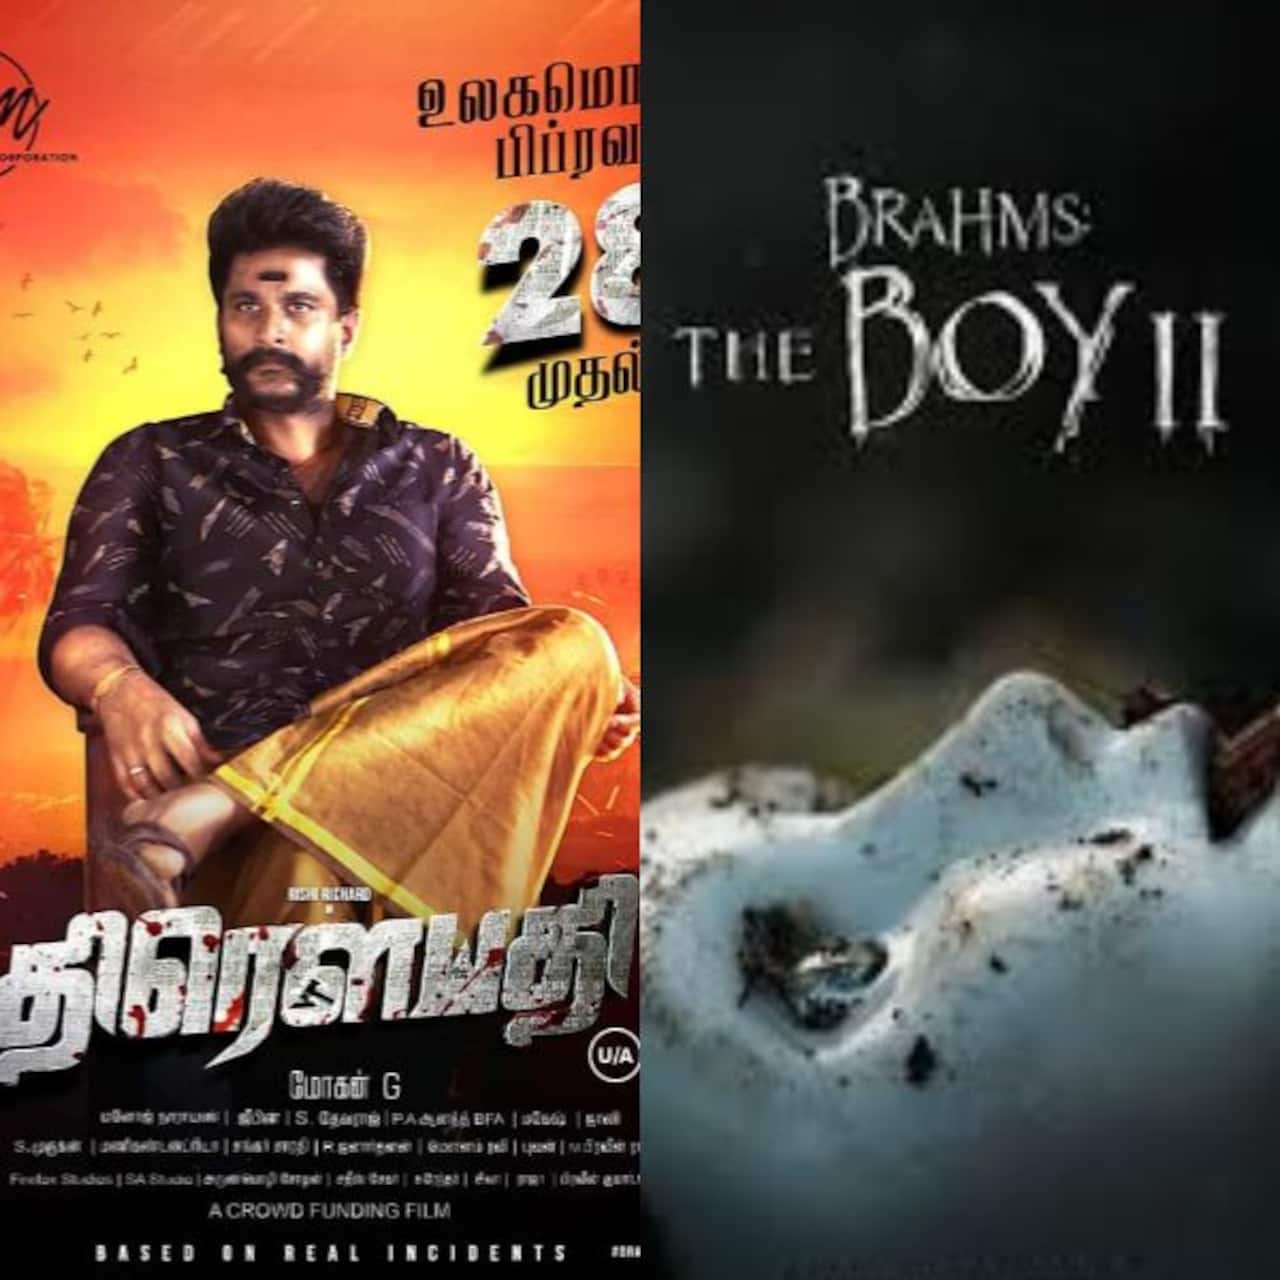 Tamilrockers leak Tamil movie Draupathi and Hollywood movie Brahms The